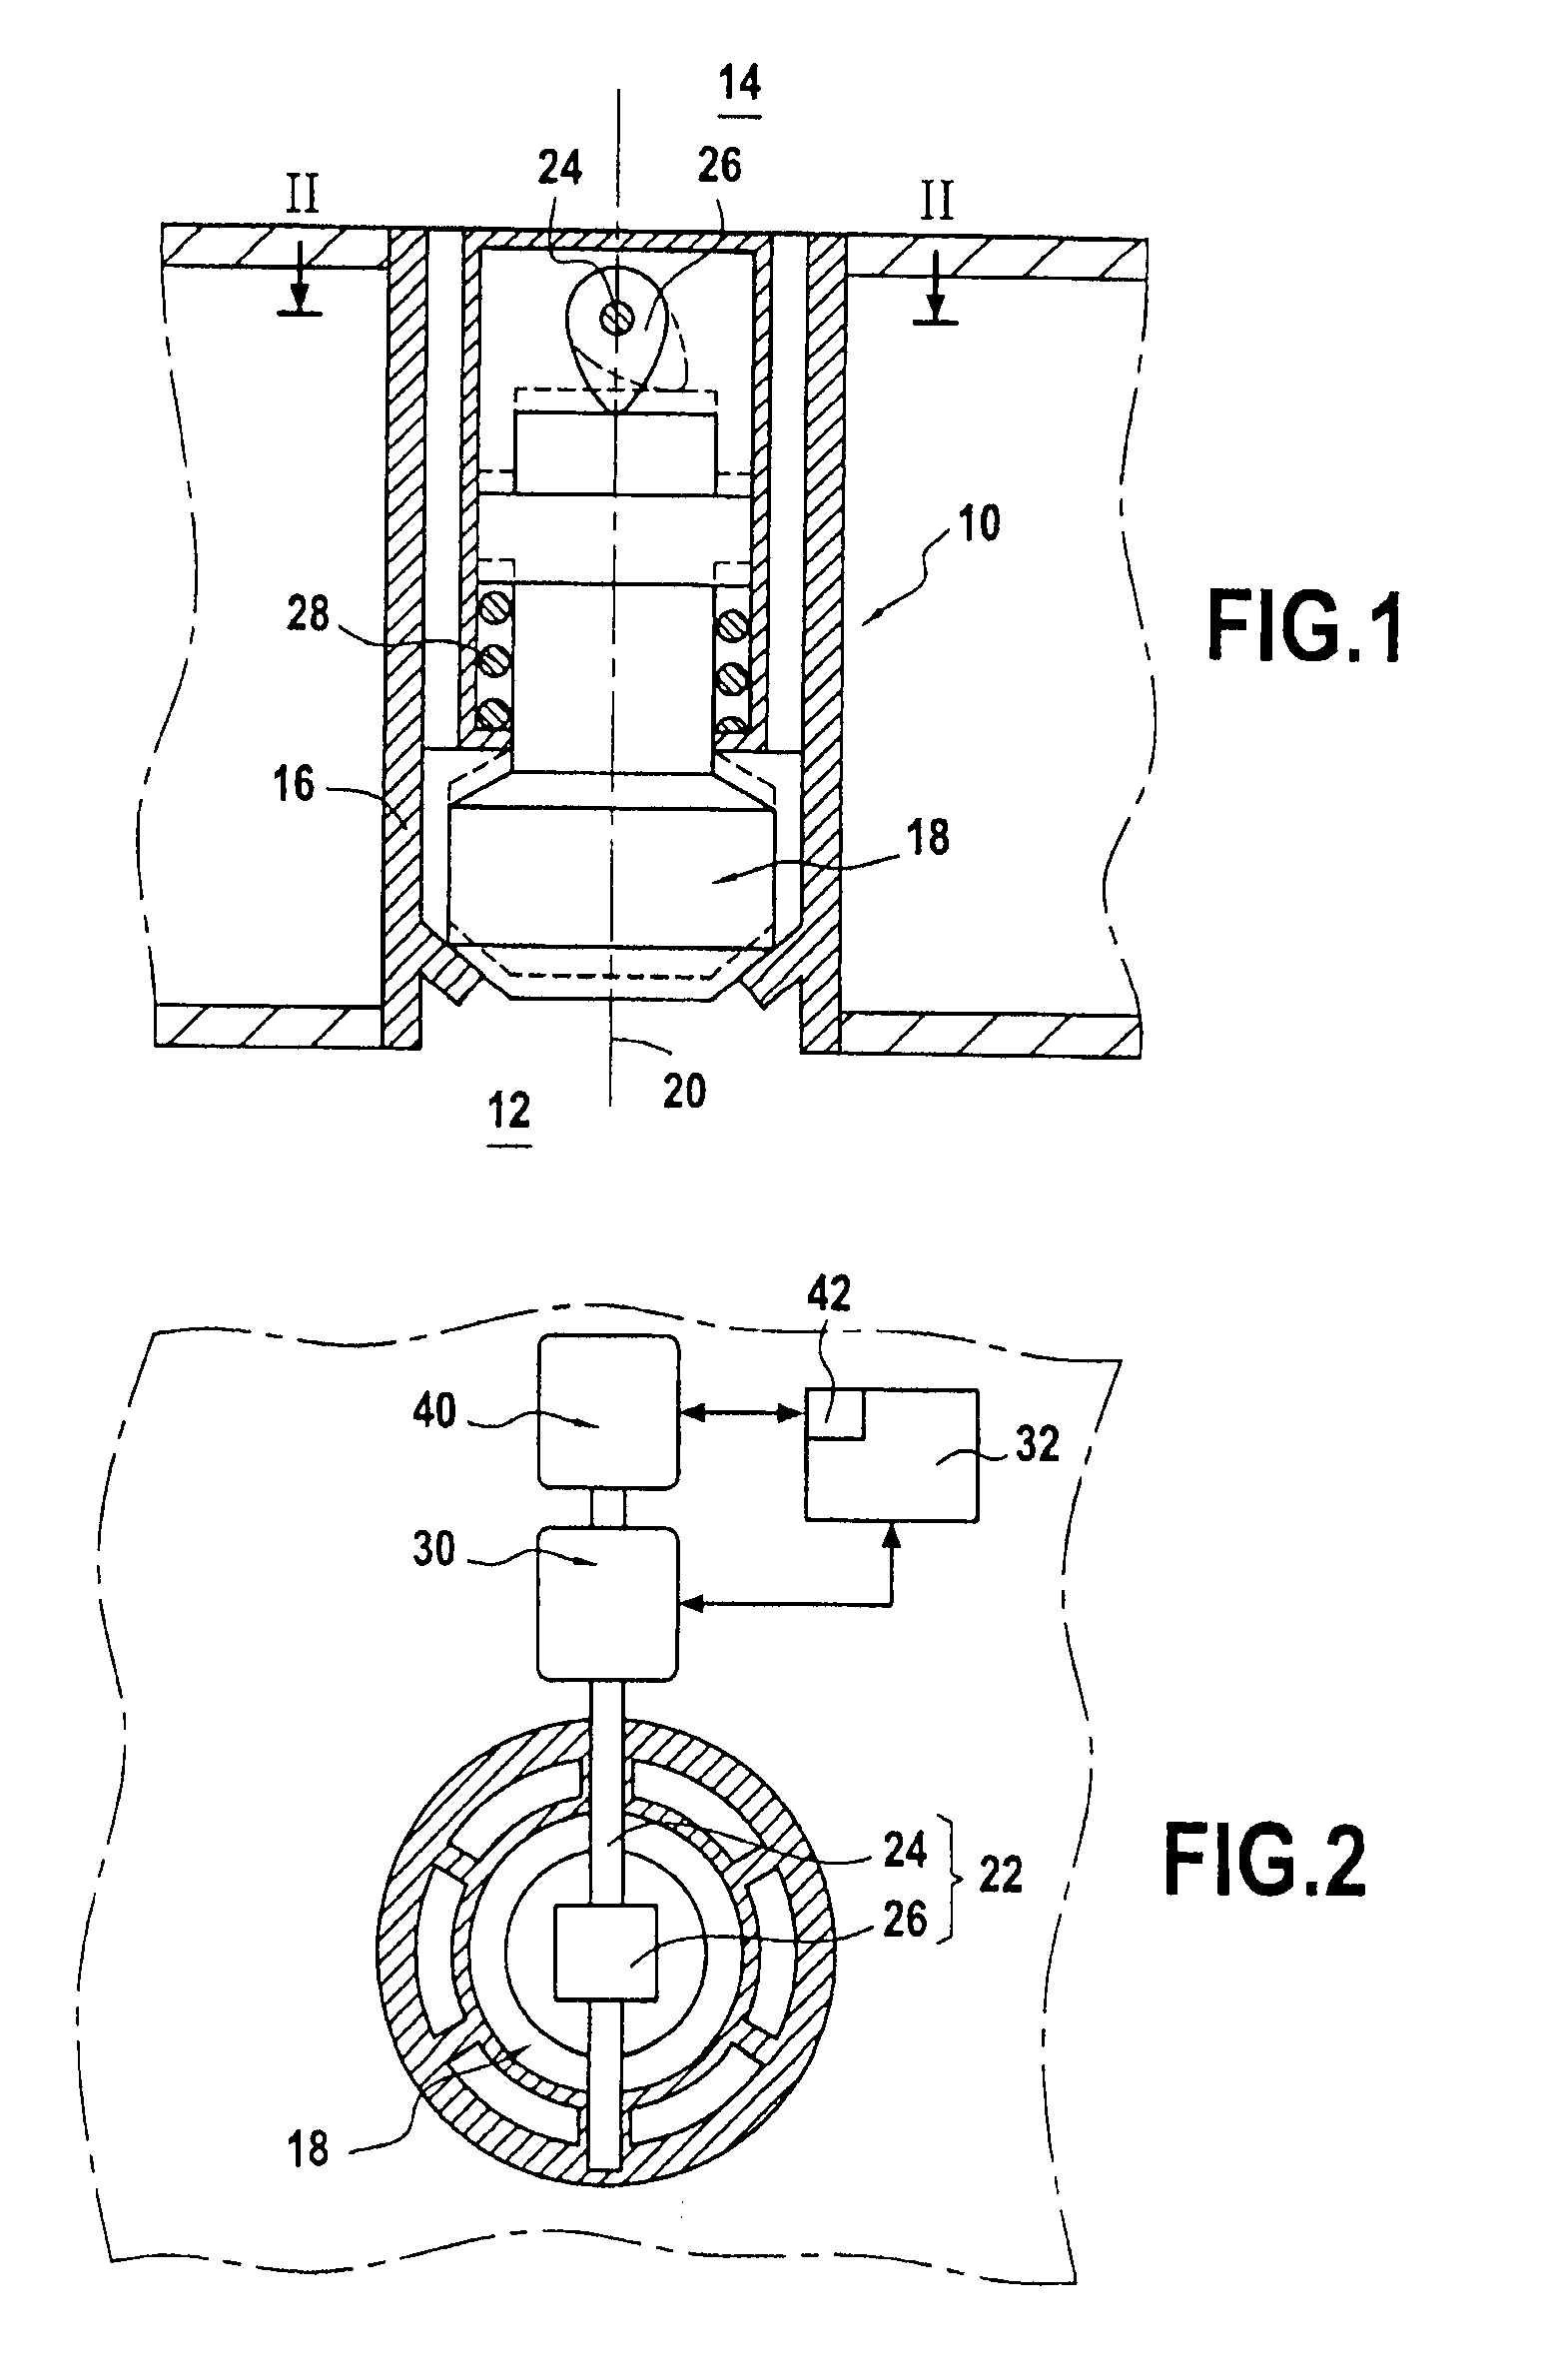 Air discharge system for an aeronautical turbine engine compressor